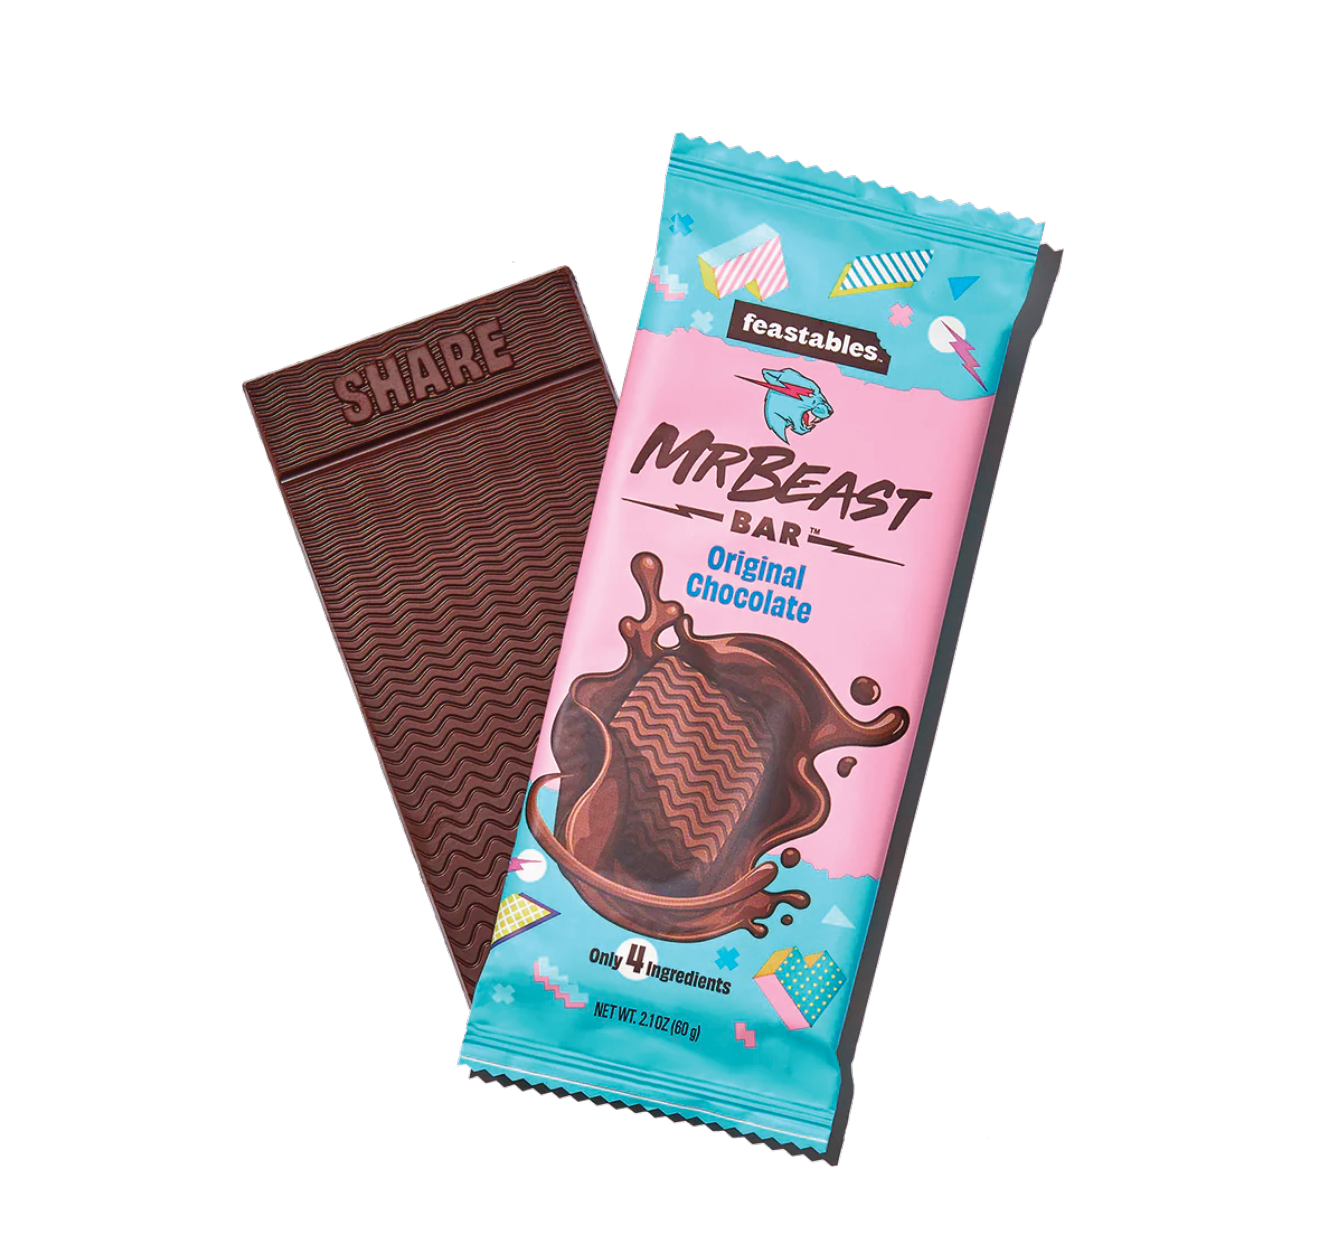 Mr. Beast Original Chocolate Bar